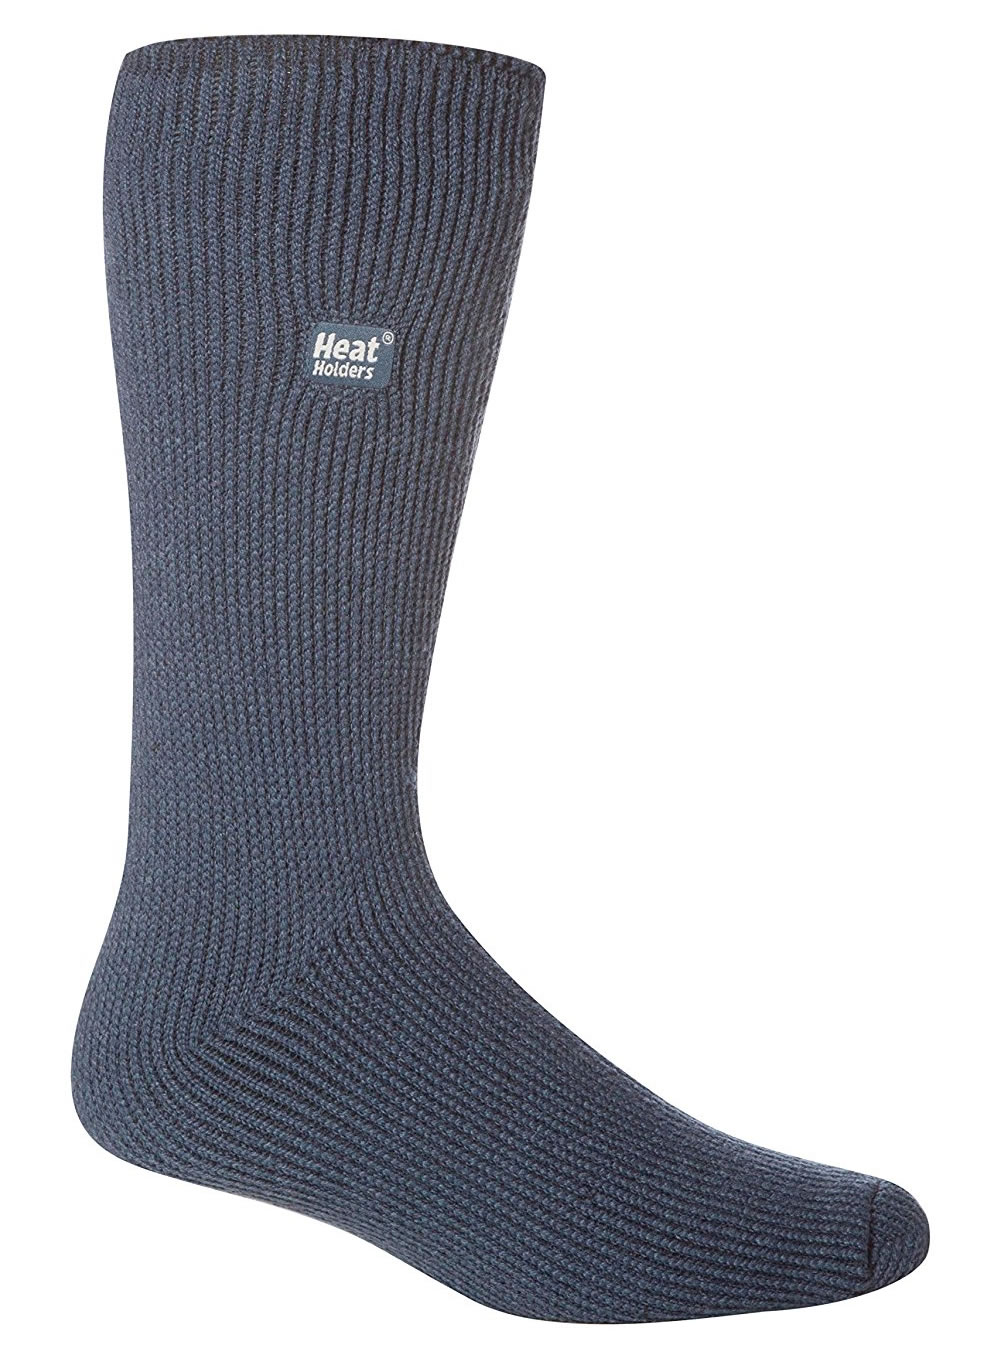 Heat Holders Thermal Socks - 09 (denim blue)